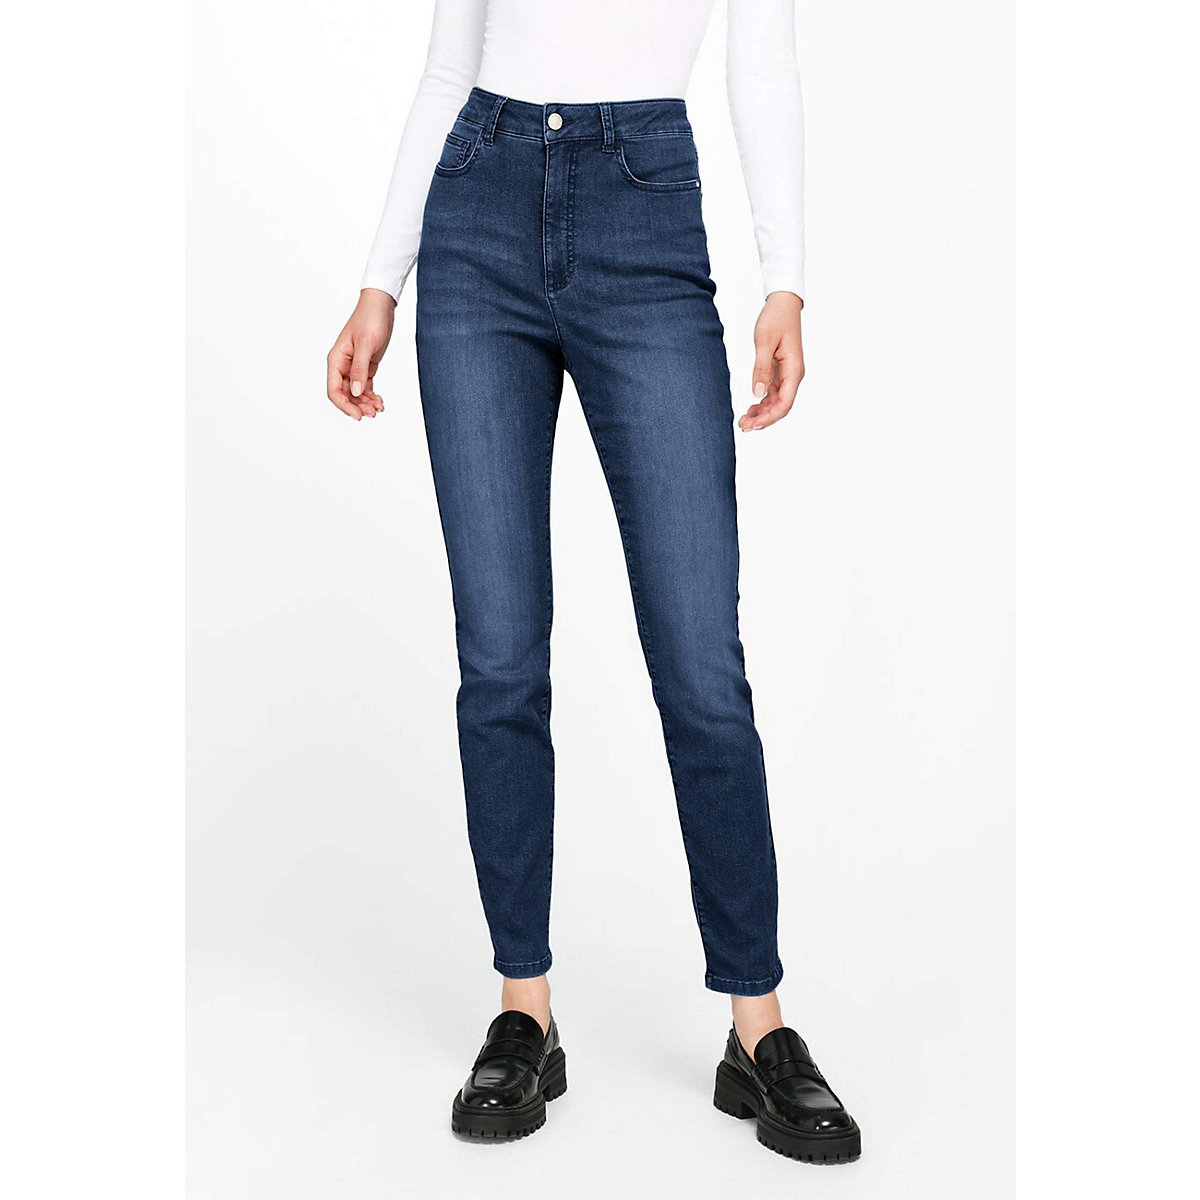 UTA RAASCH 5-Pocket Jeans Cotton Jeanshosen dunkelblau